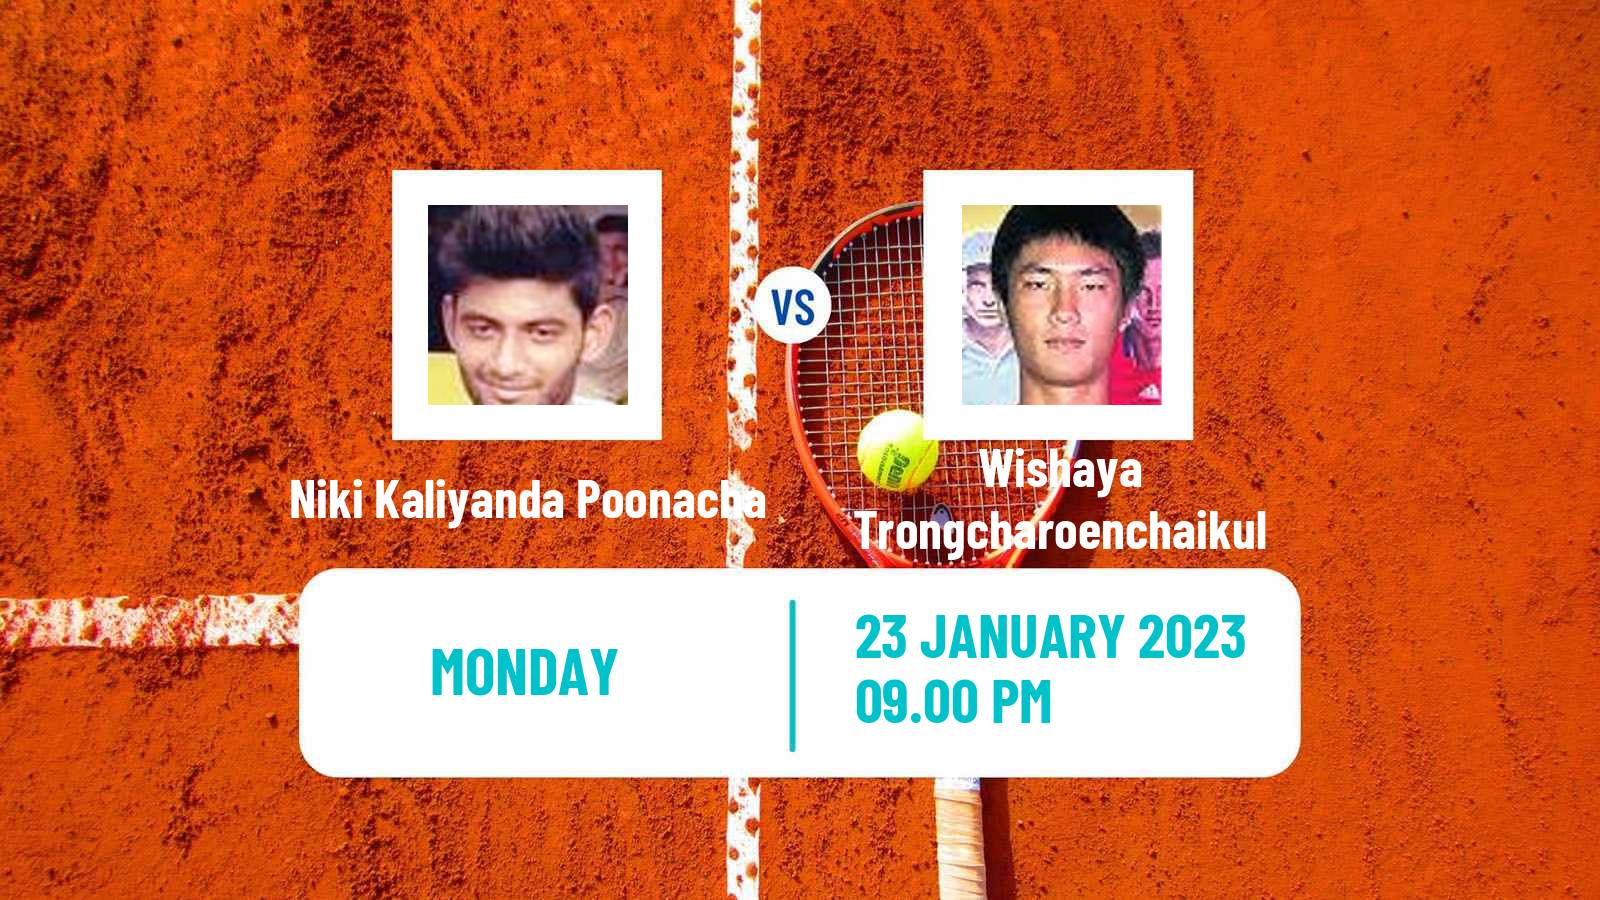 Tennis ITF Tournaments Niki Kaliyanda Poonacha - Wishaya Trongcharoenchaikul